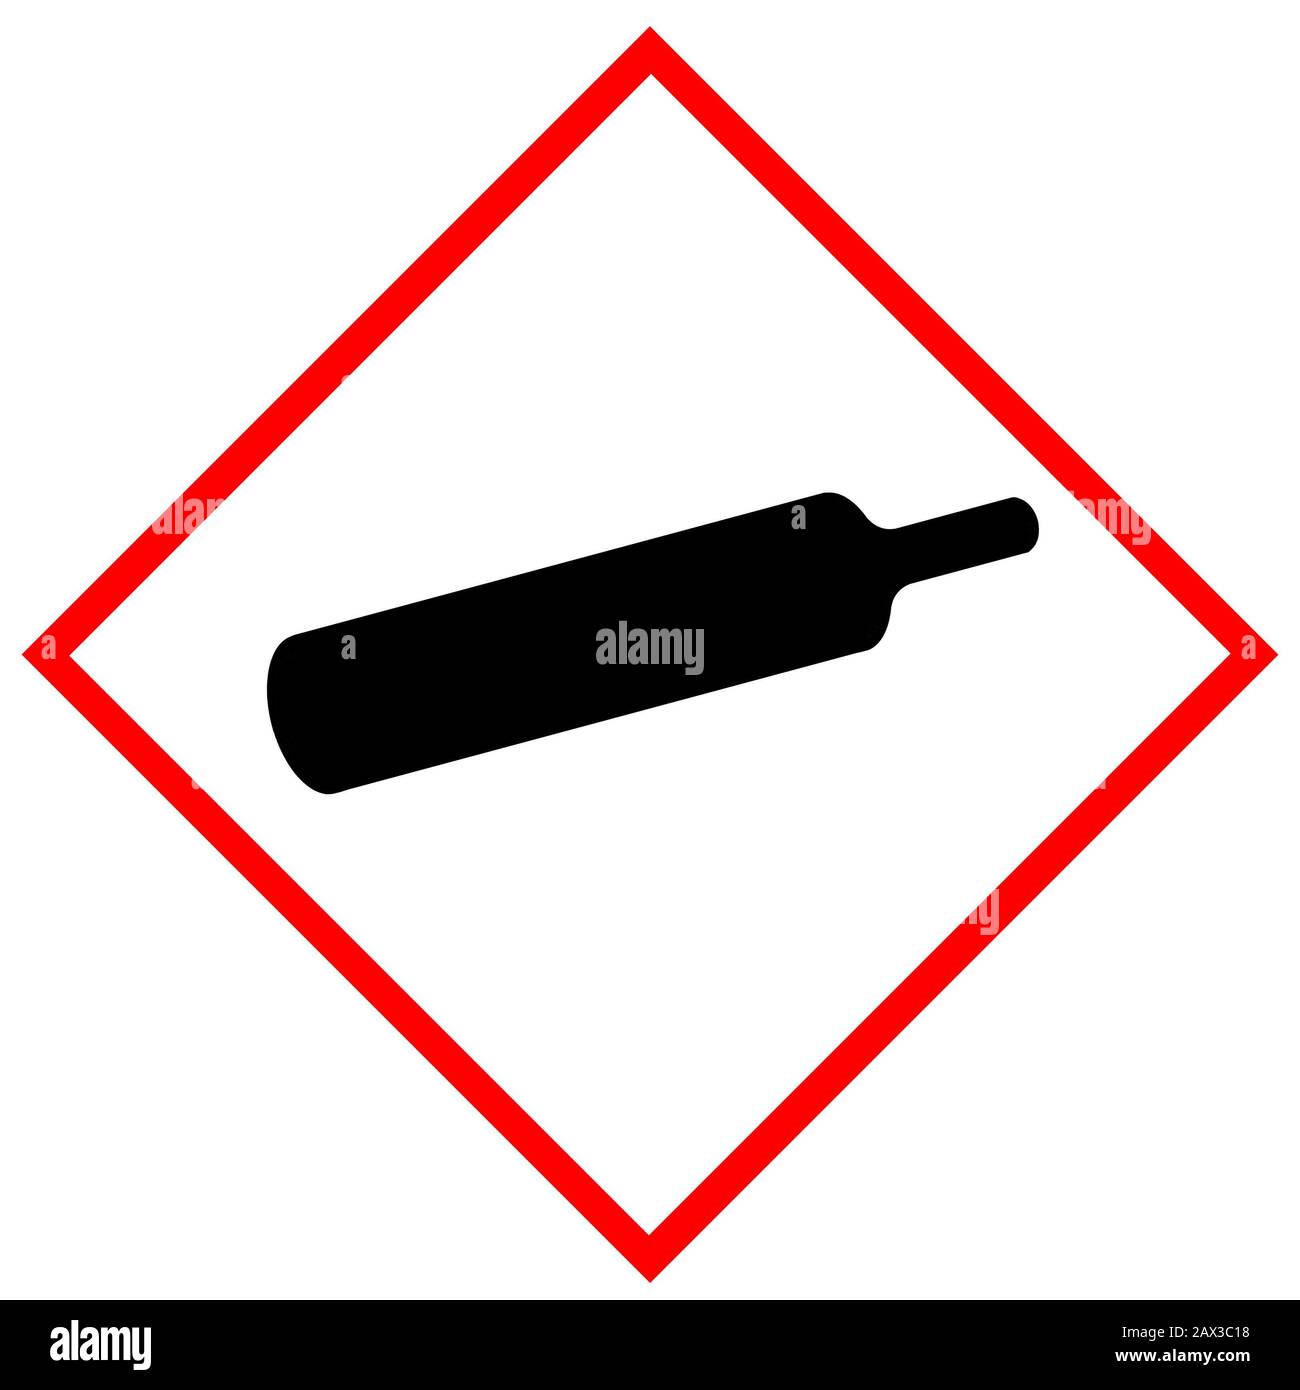 Gasses under pressure (symbol gas bottle) sign Stock Photo